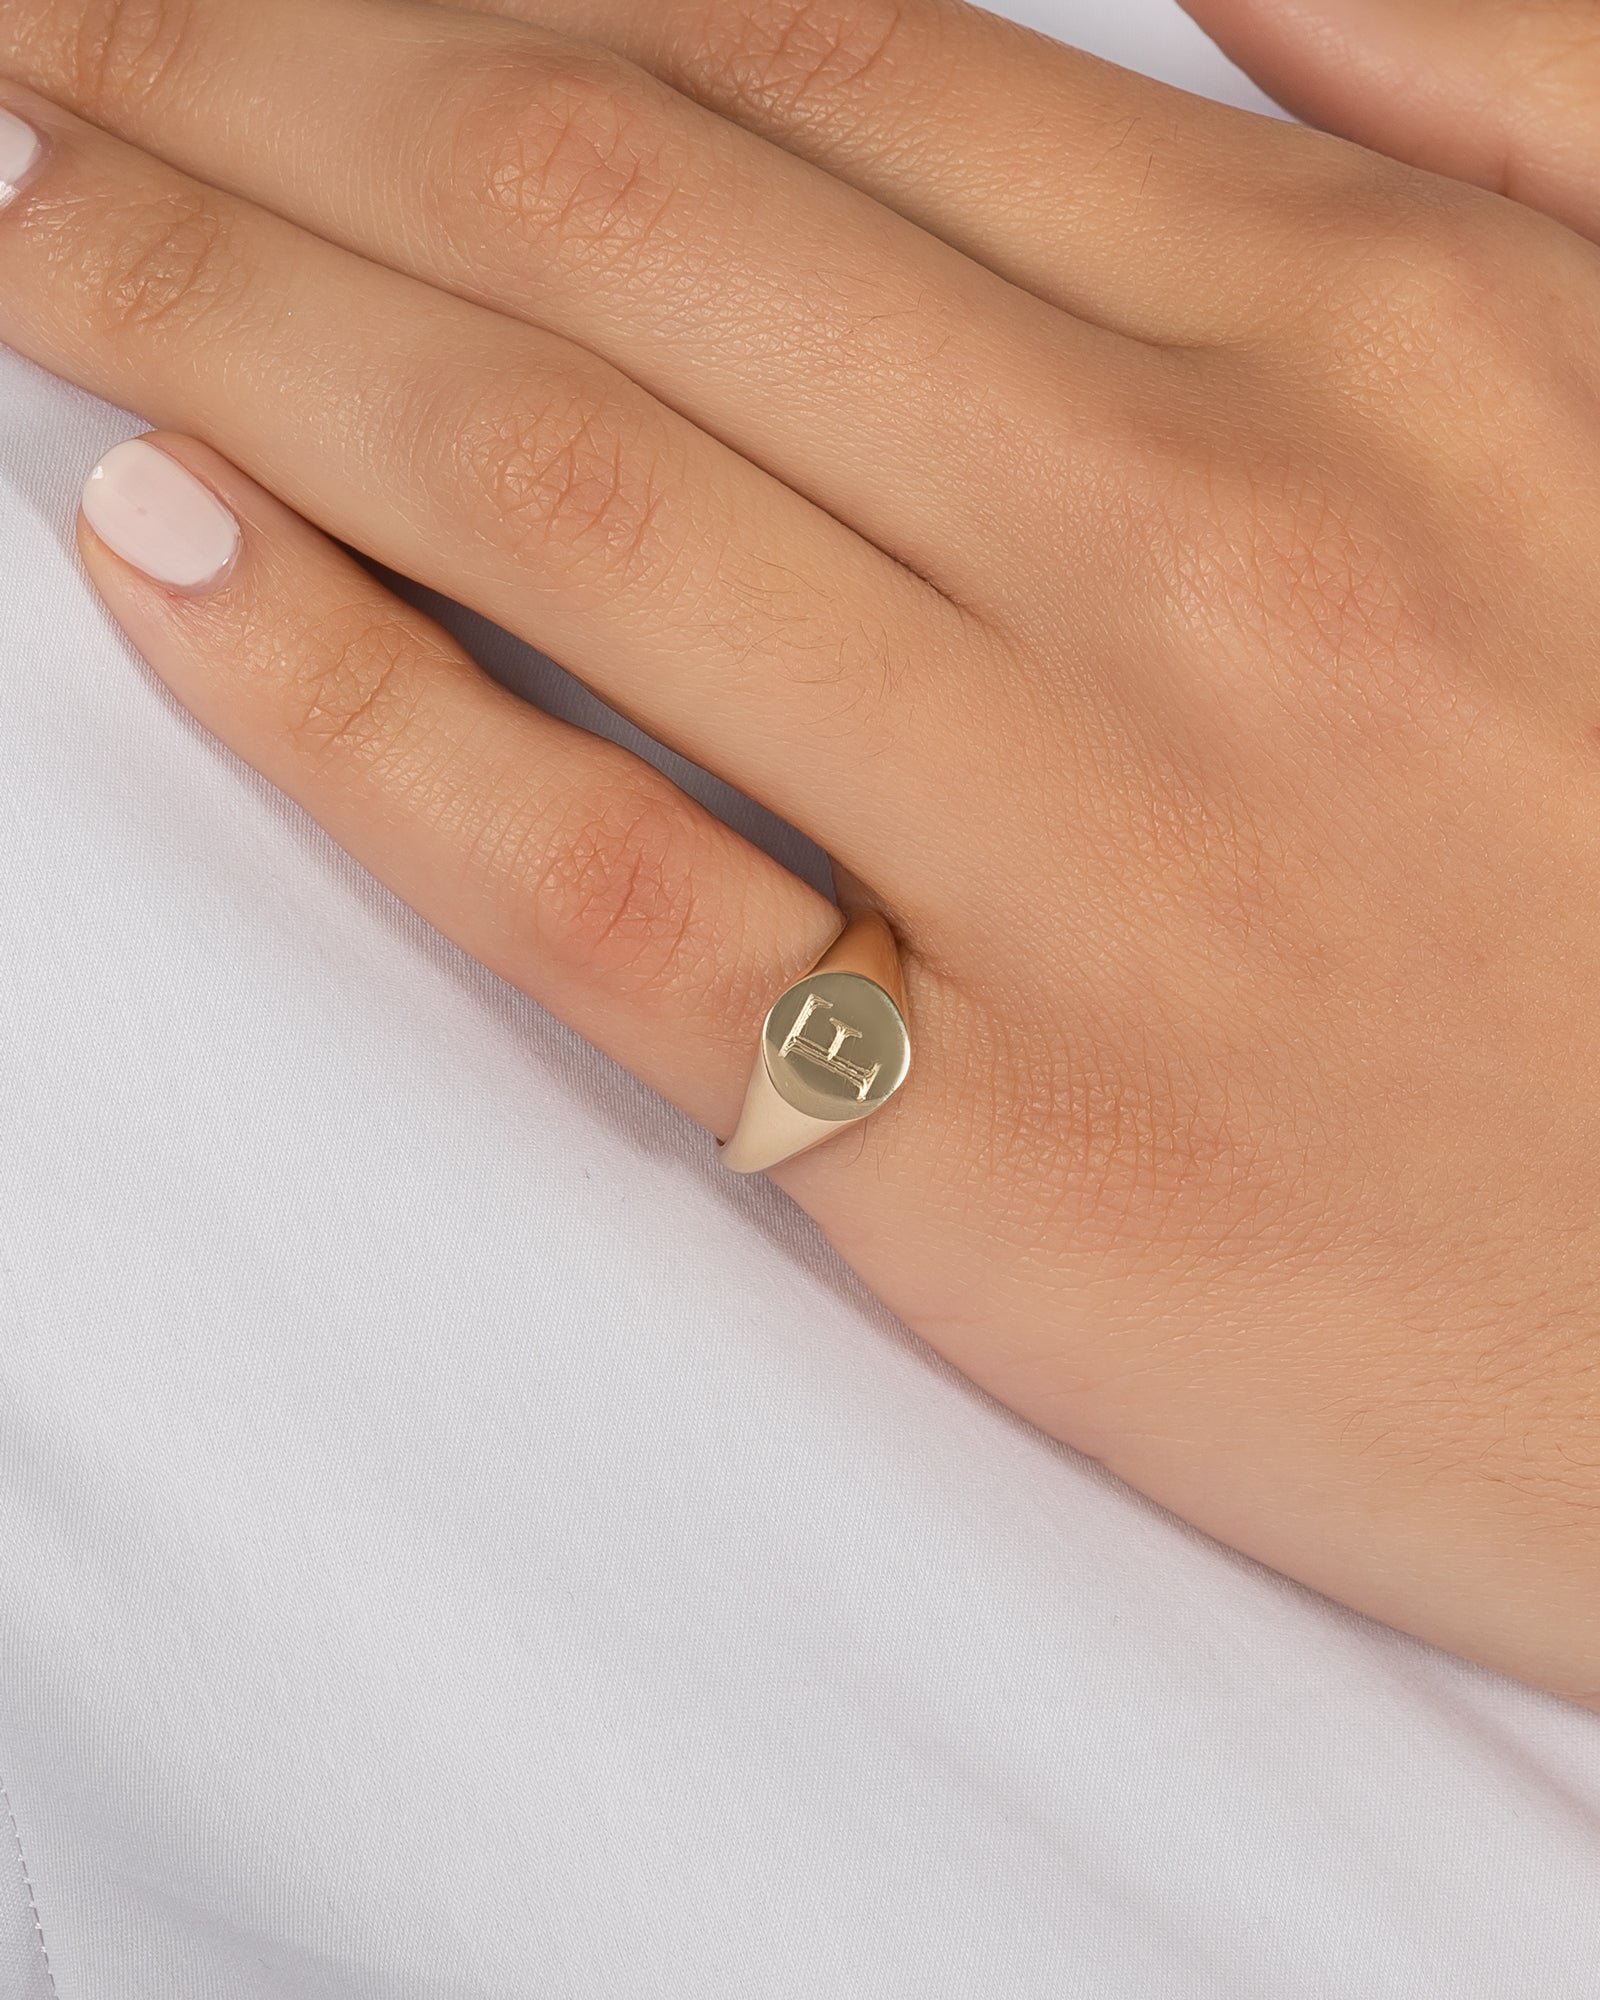 Women's Small Round Signet Ring